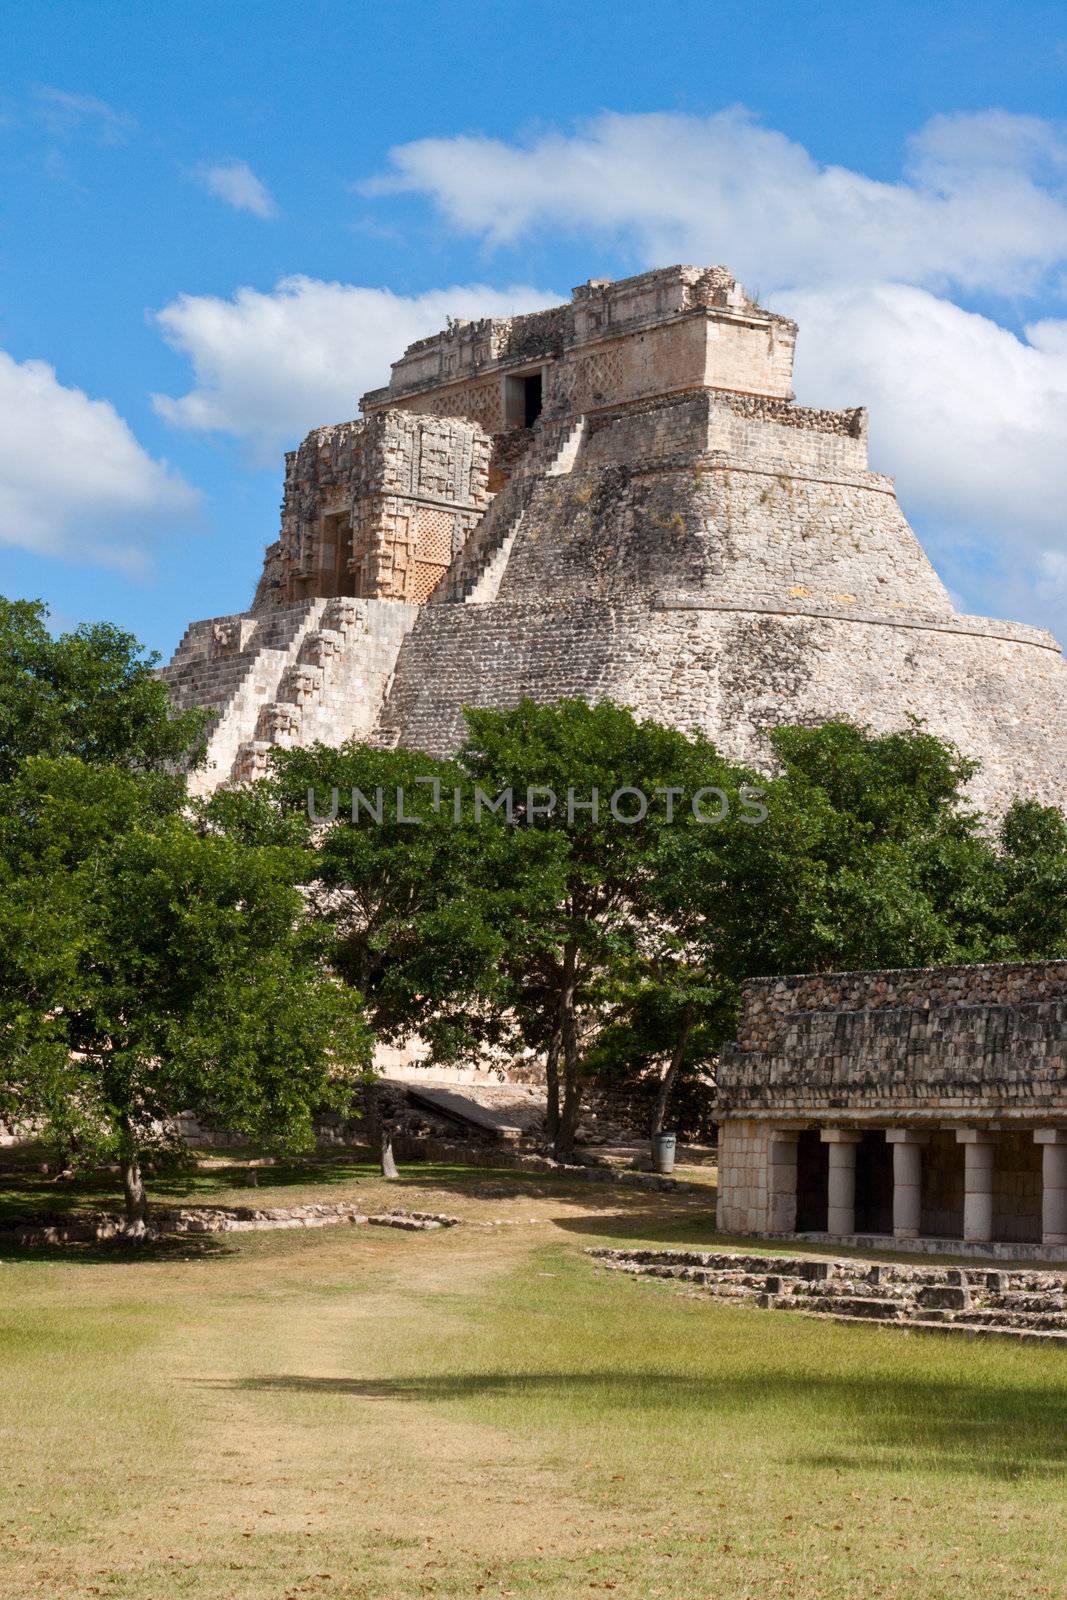 Mayan pyramid (Pyramid of the Magician, Adivino) in Uxmal, Mexic by dimol